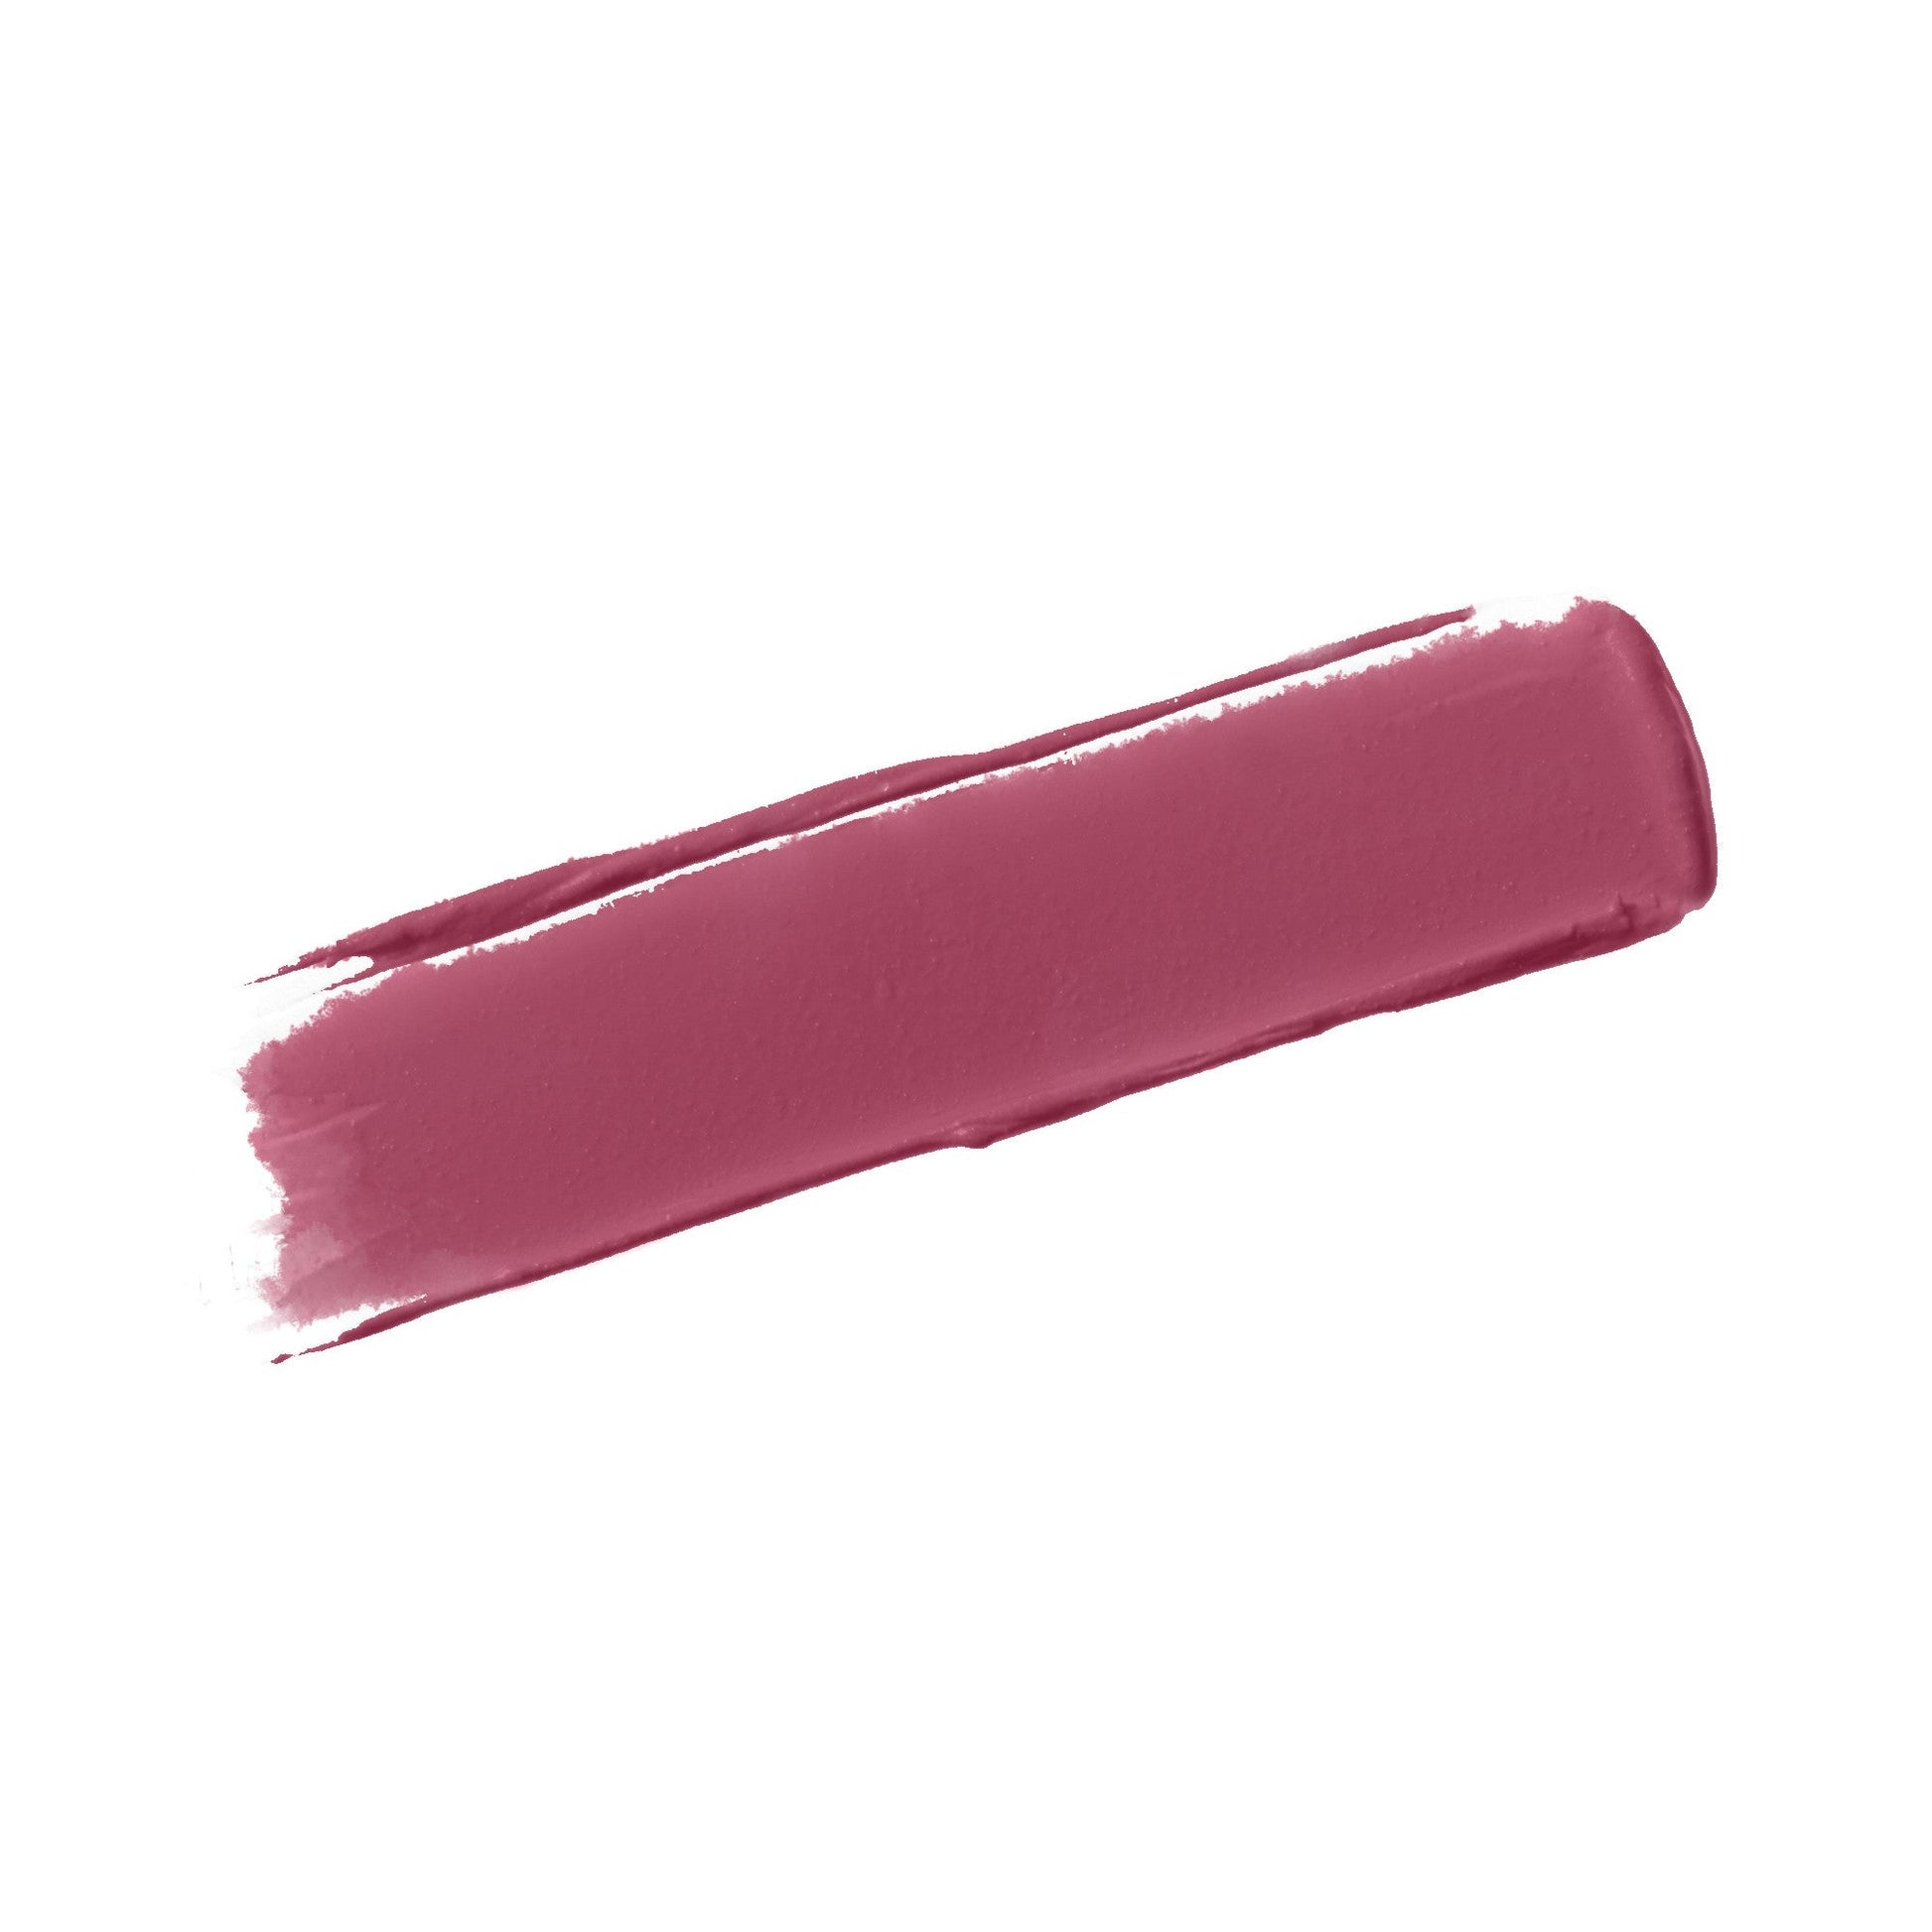 Desert Pink Vegan and Cruelty Free Liquid Lipstick swatch Made in Canada